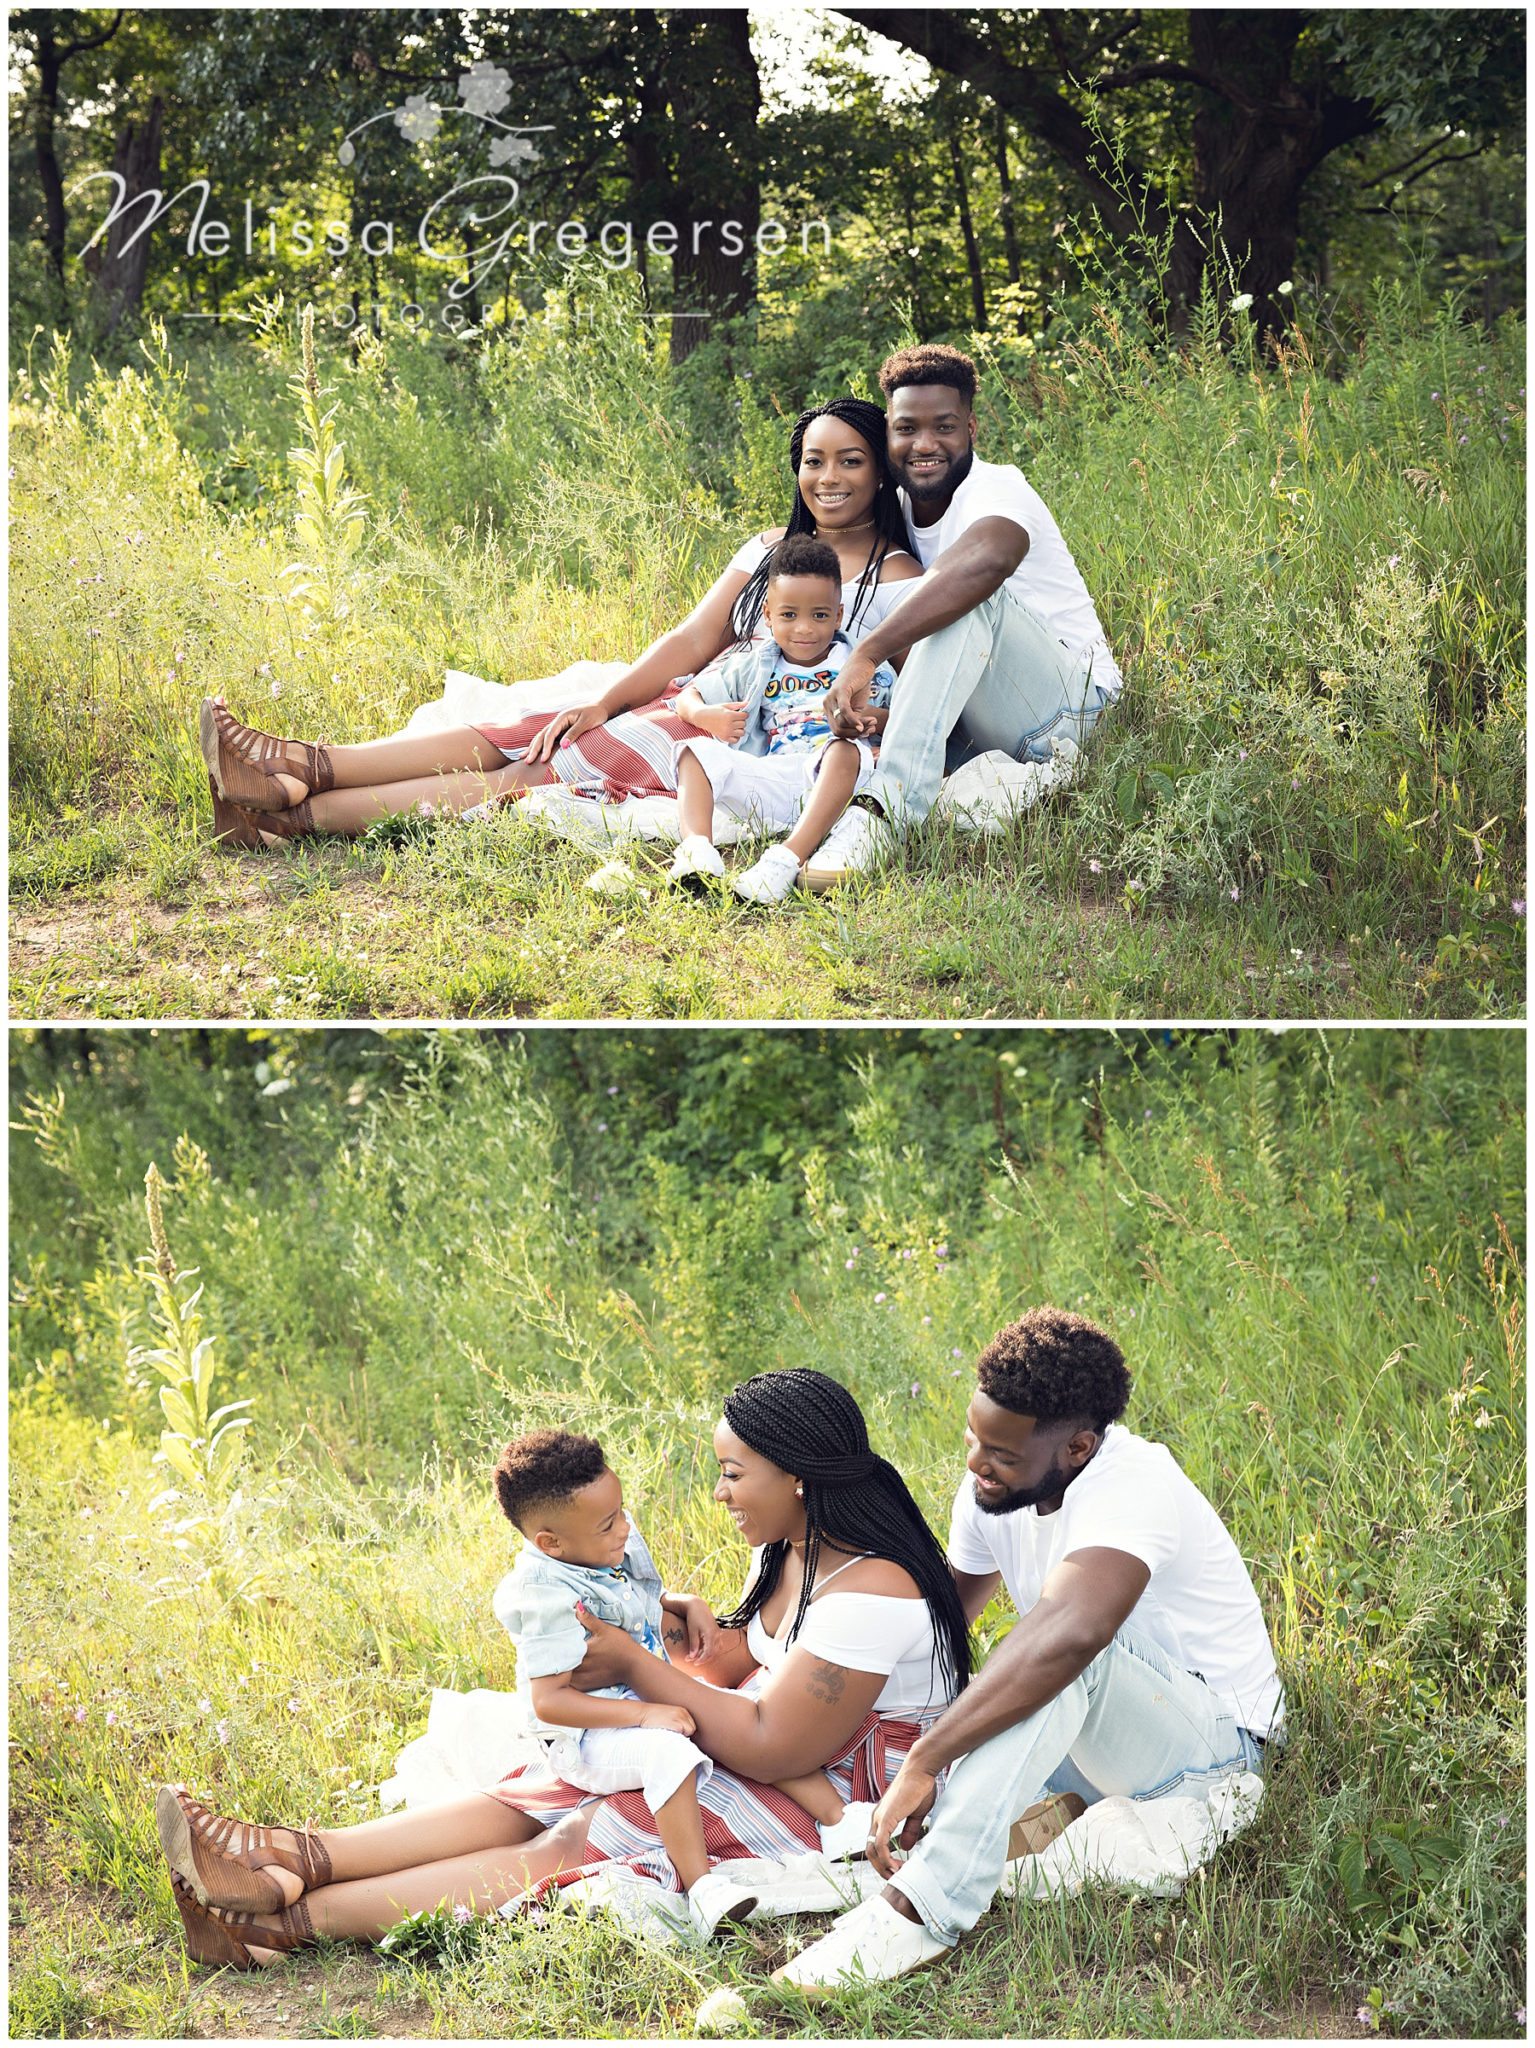 Wilkins Family :: Kalamazoo Family Photography Gregersen Photography